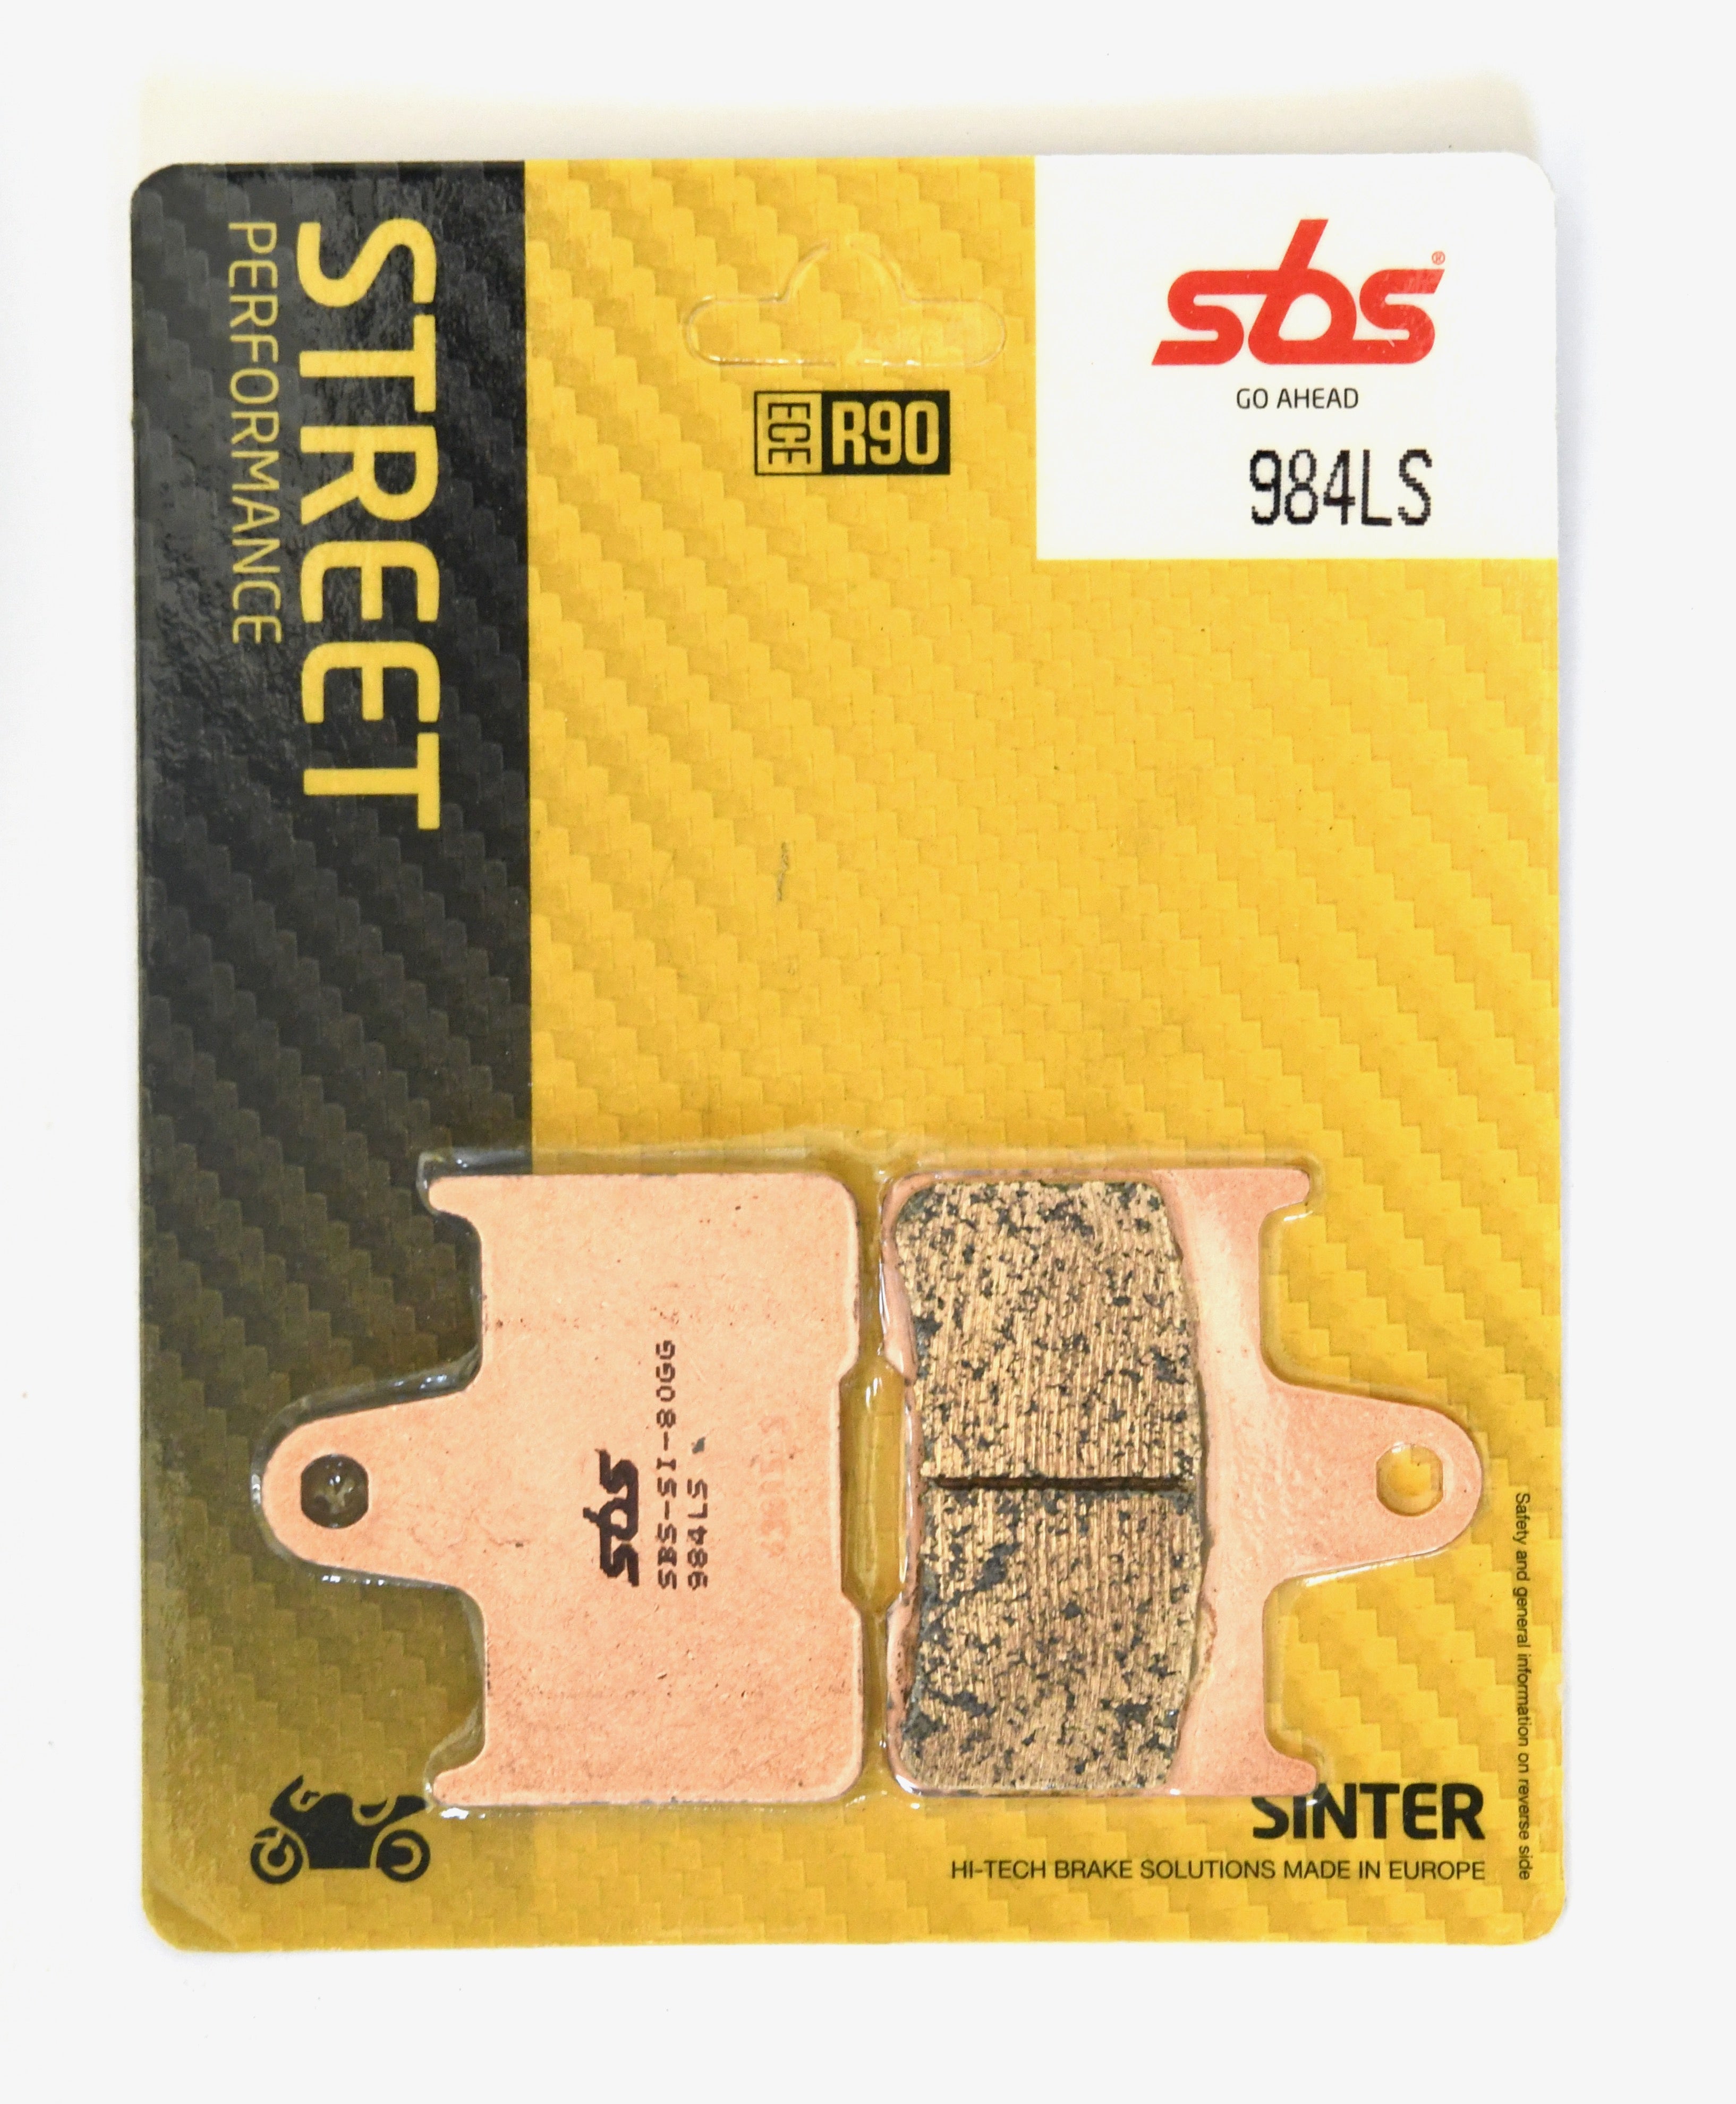 SBS 984LS Street Sinter Rear Brake Pads